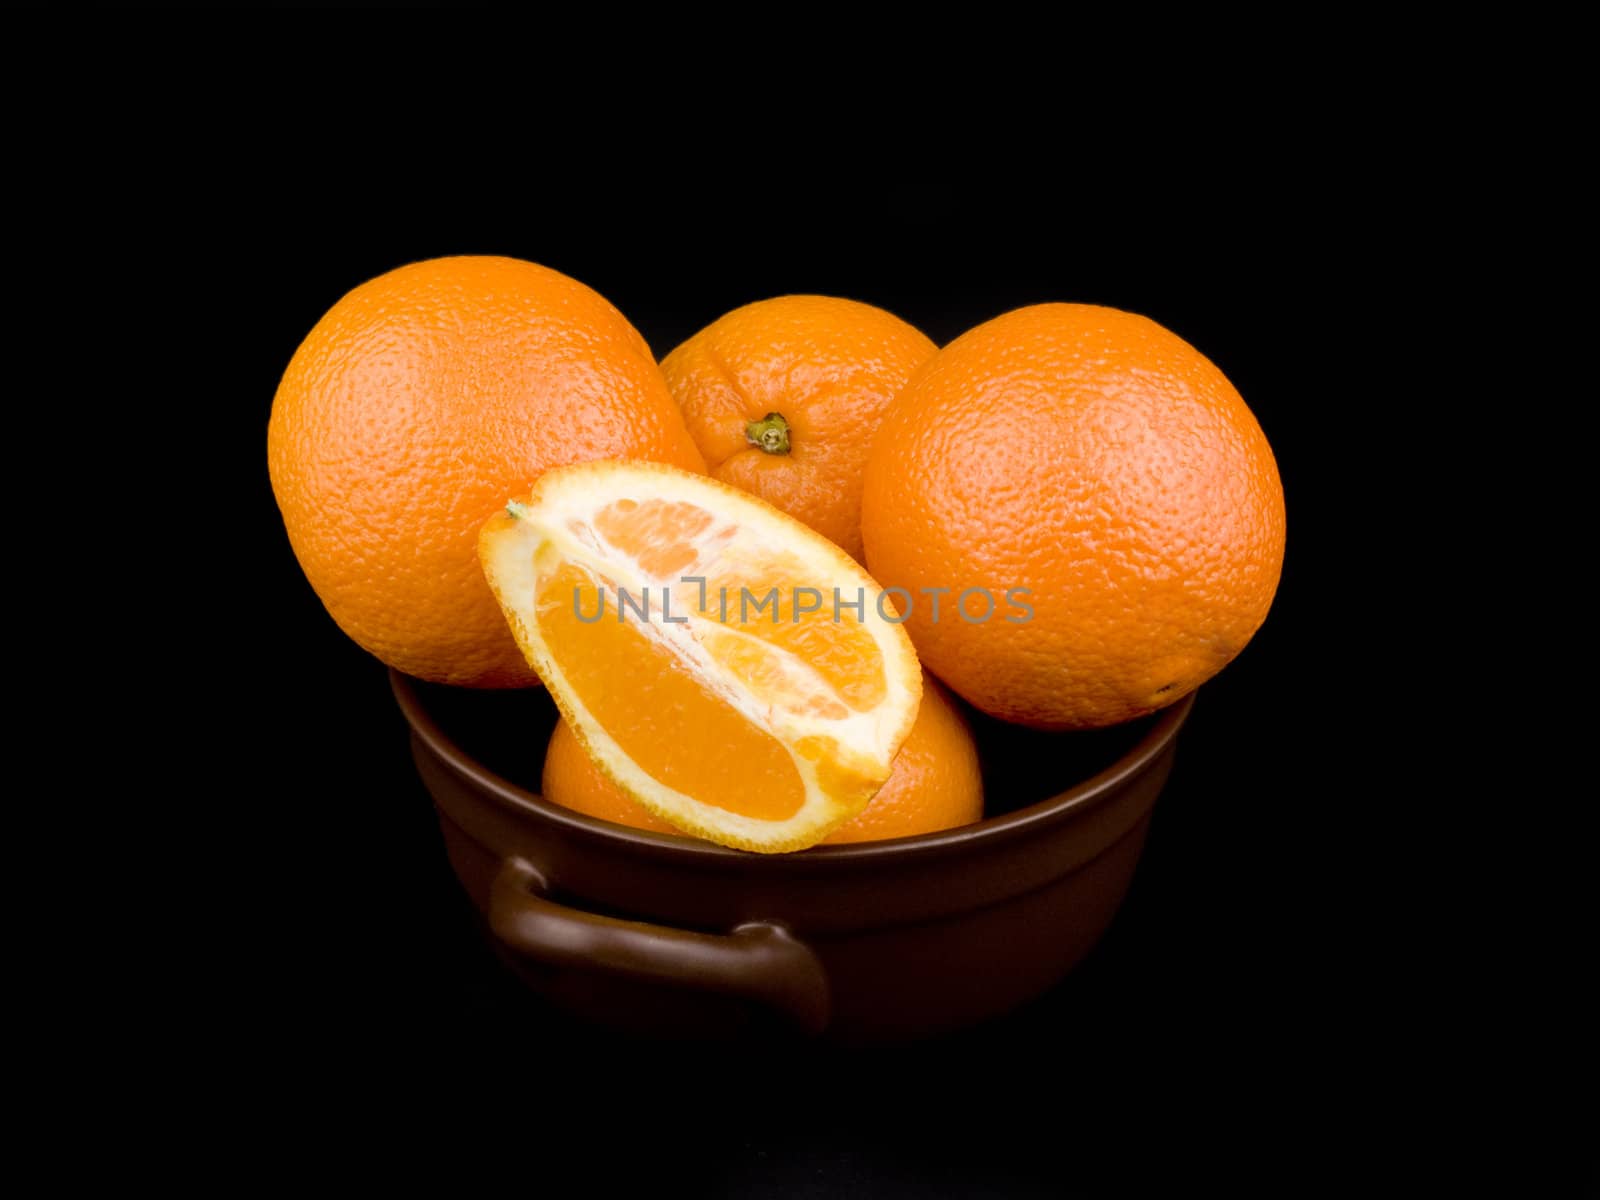 Oranges in ceramic bowl on black background